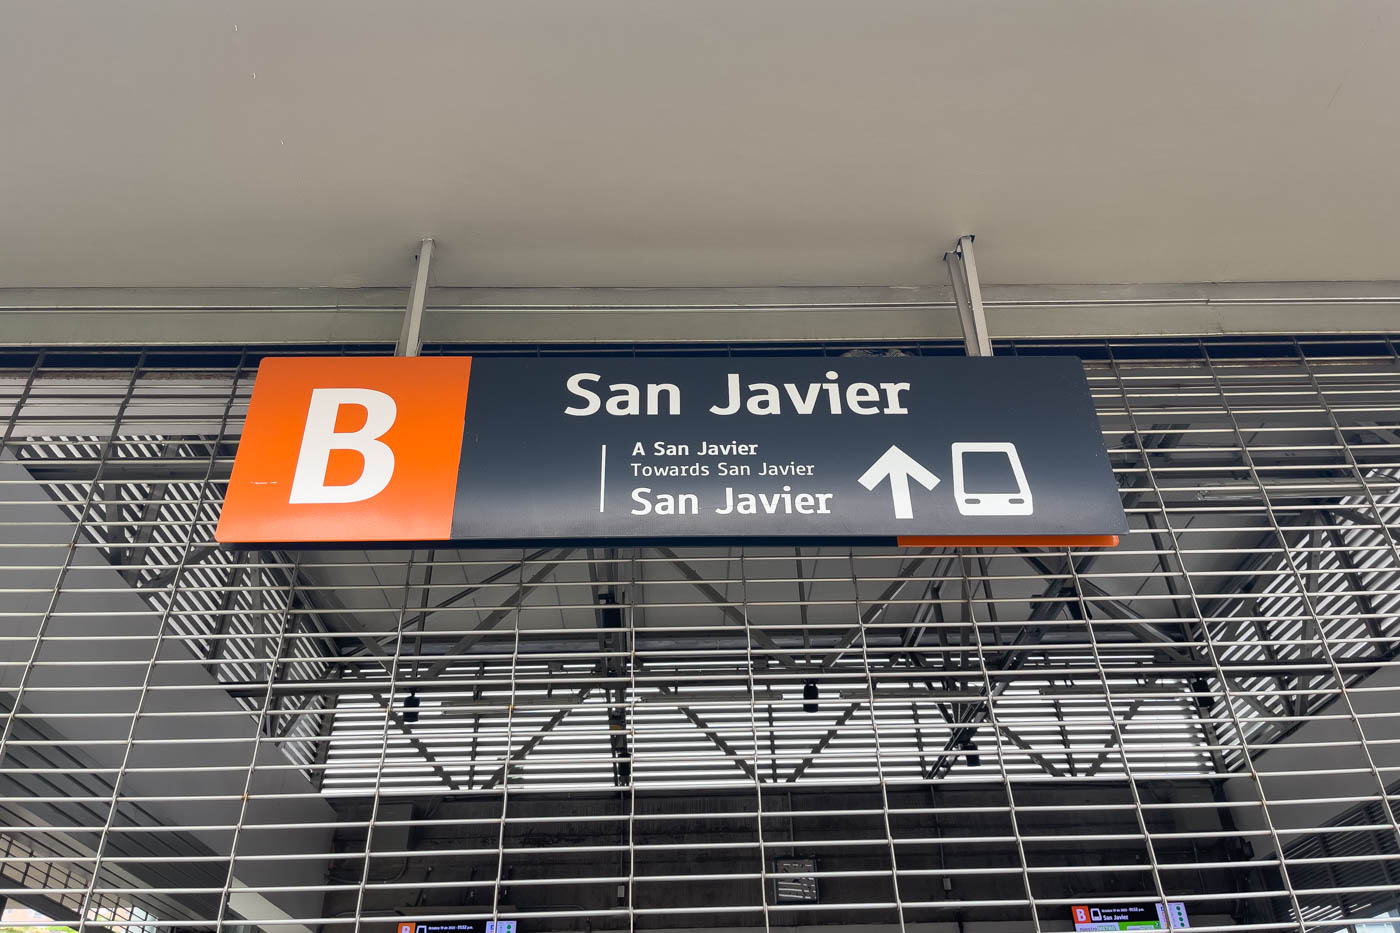 San Javier metro station location sign.